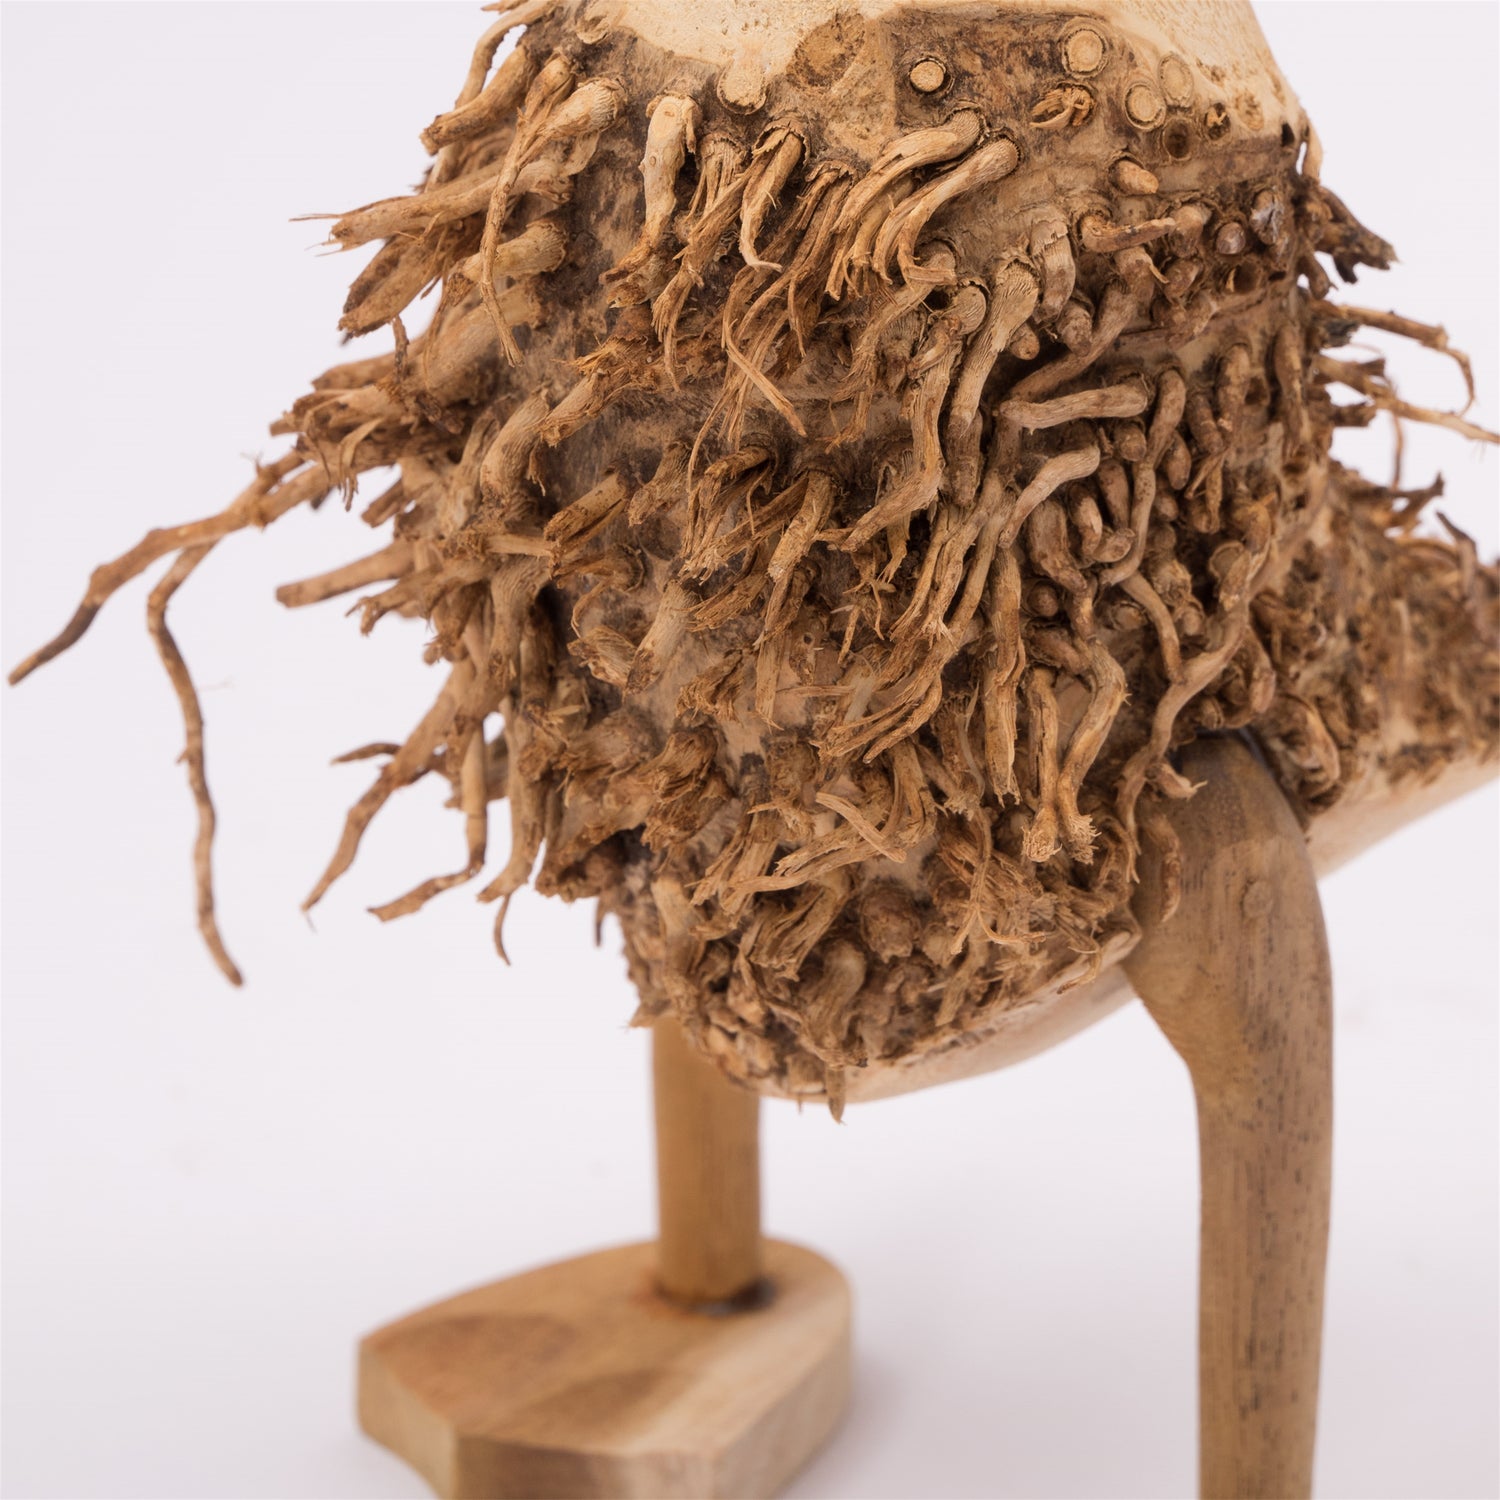 HOLZ ENTE "DUCK" | Bambus, 33x15cm (HxL) | Wurzel Ente, Enten Skulptur